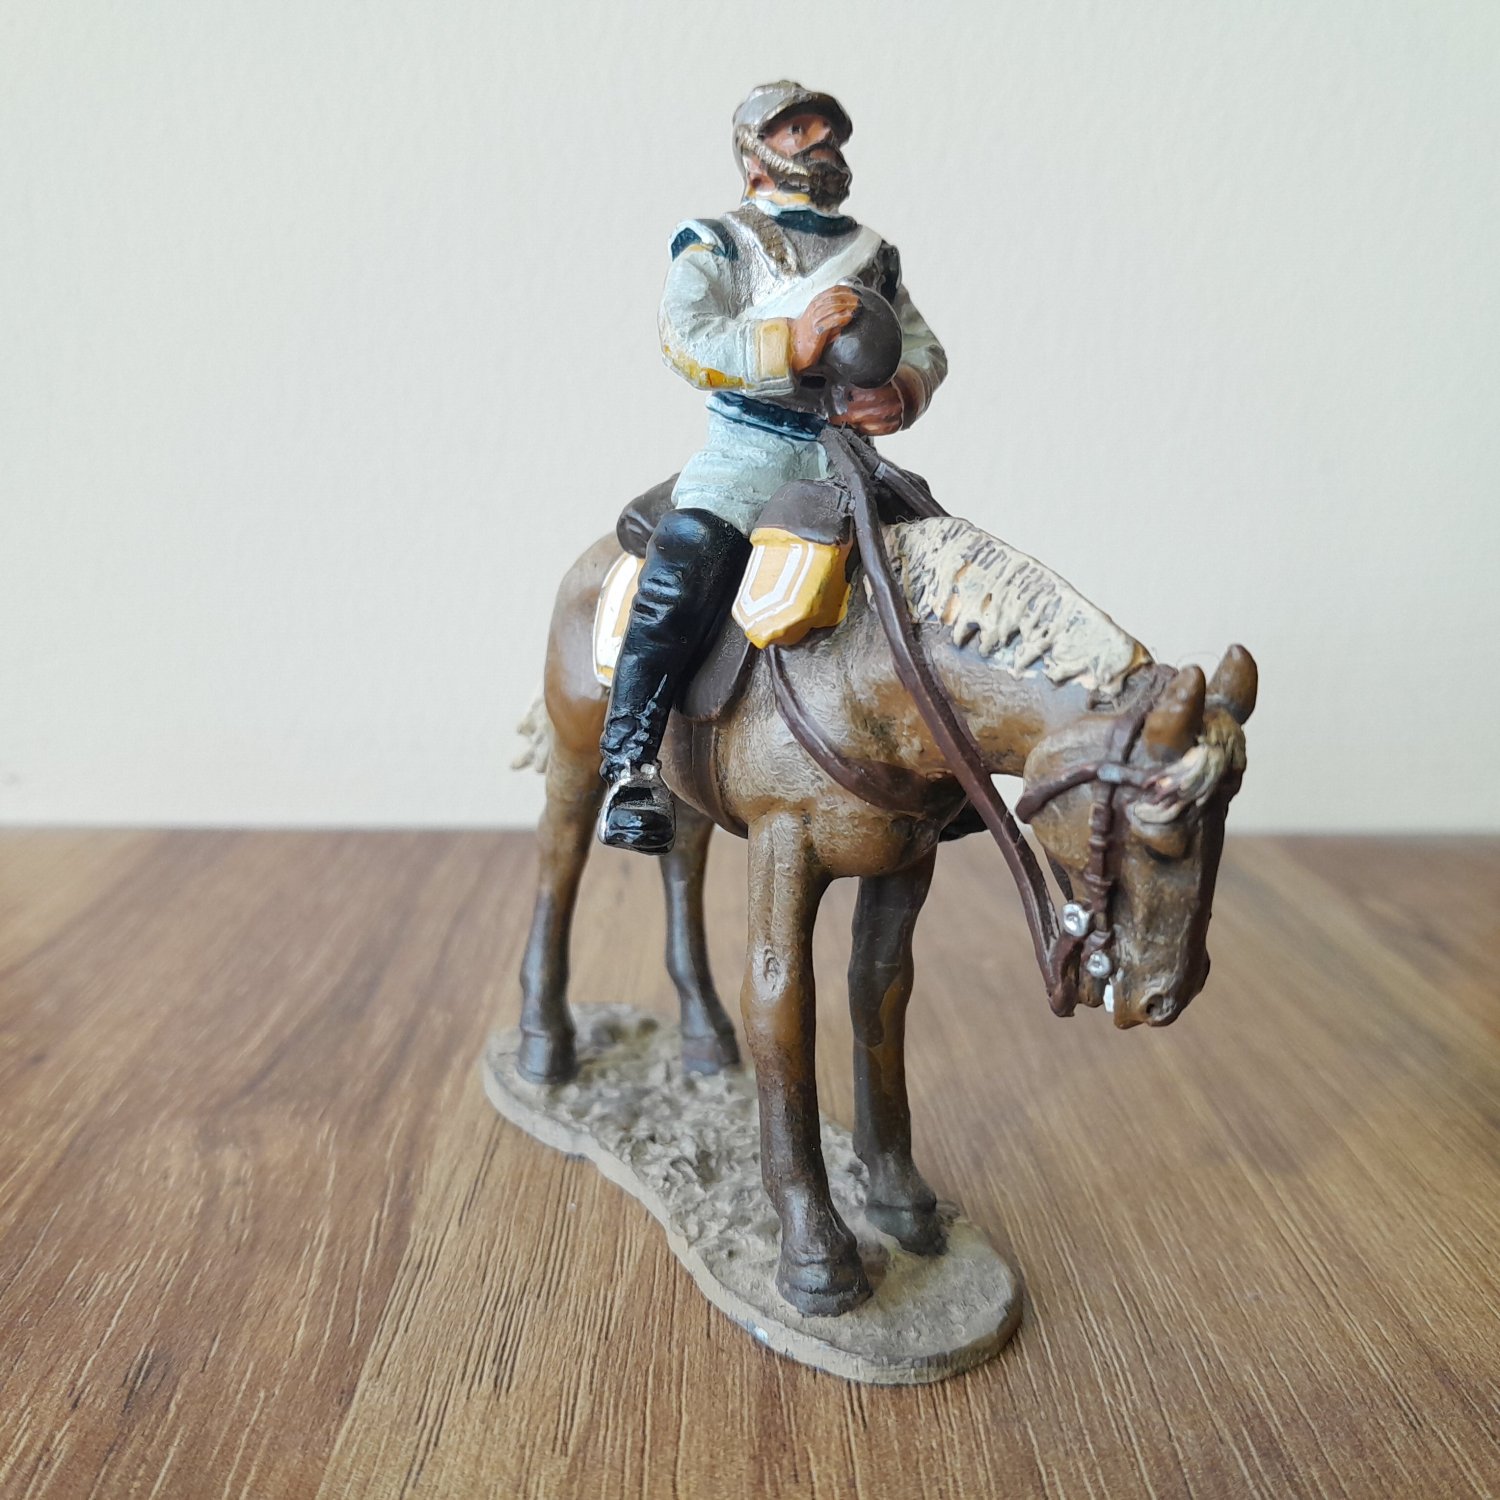 Trooper, Magdebourg Cuirassier Regiment NÂ°7, Prussia 1870, Collectable Figurine